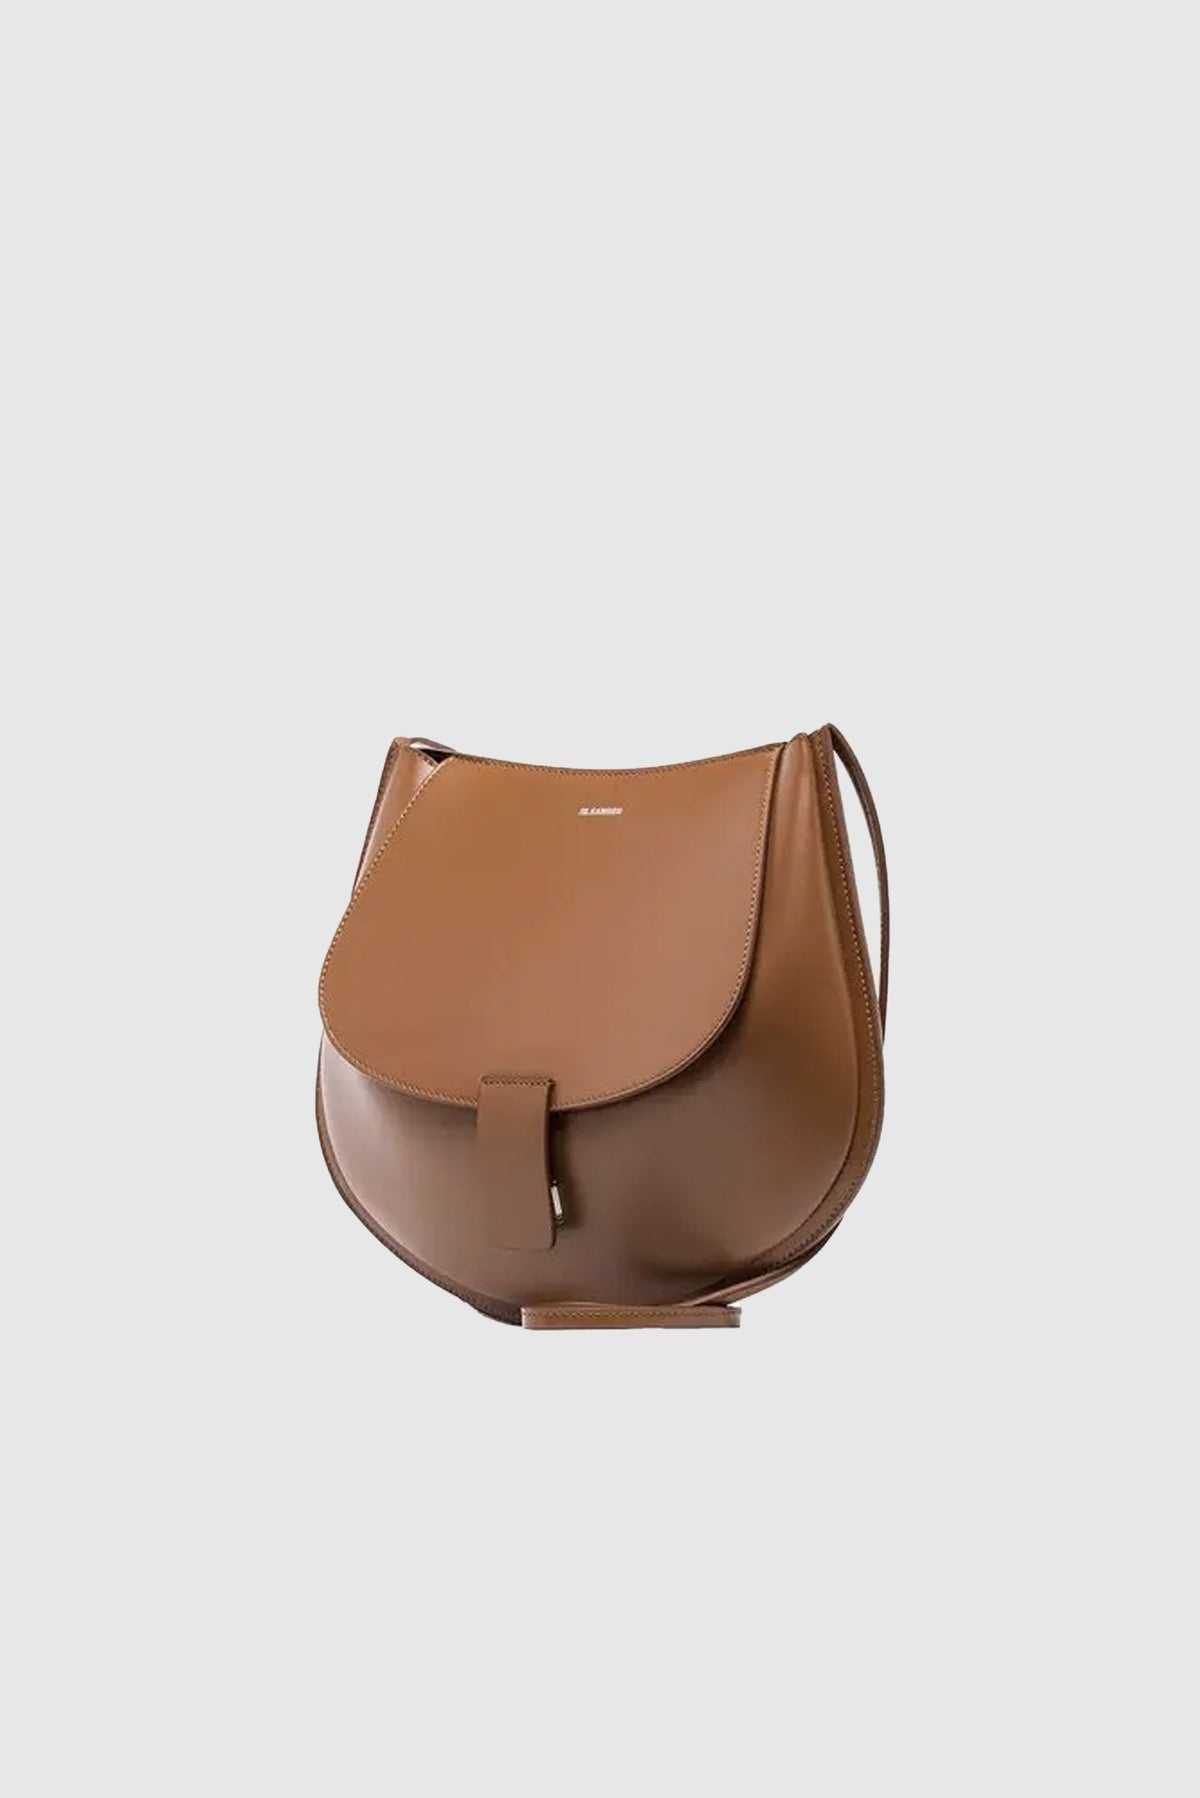 Jil Sander Soft Tan Crescent Mini Shoulder Bag